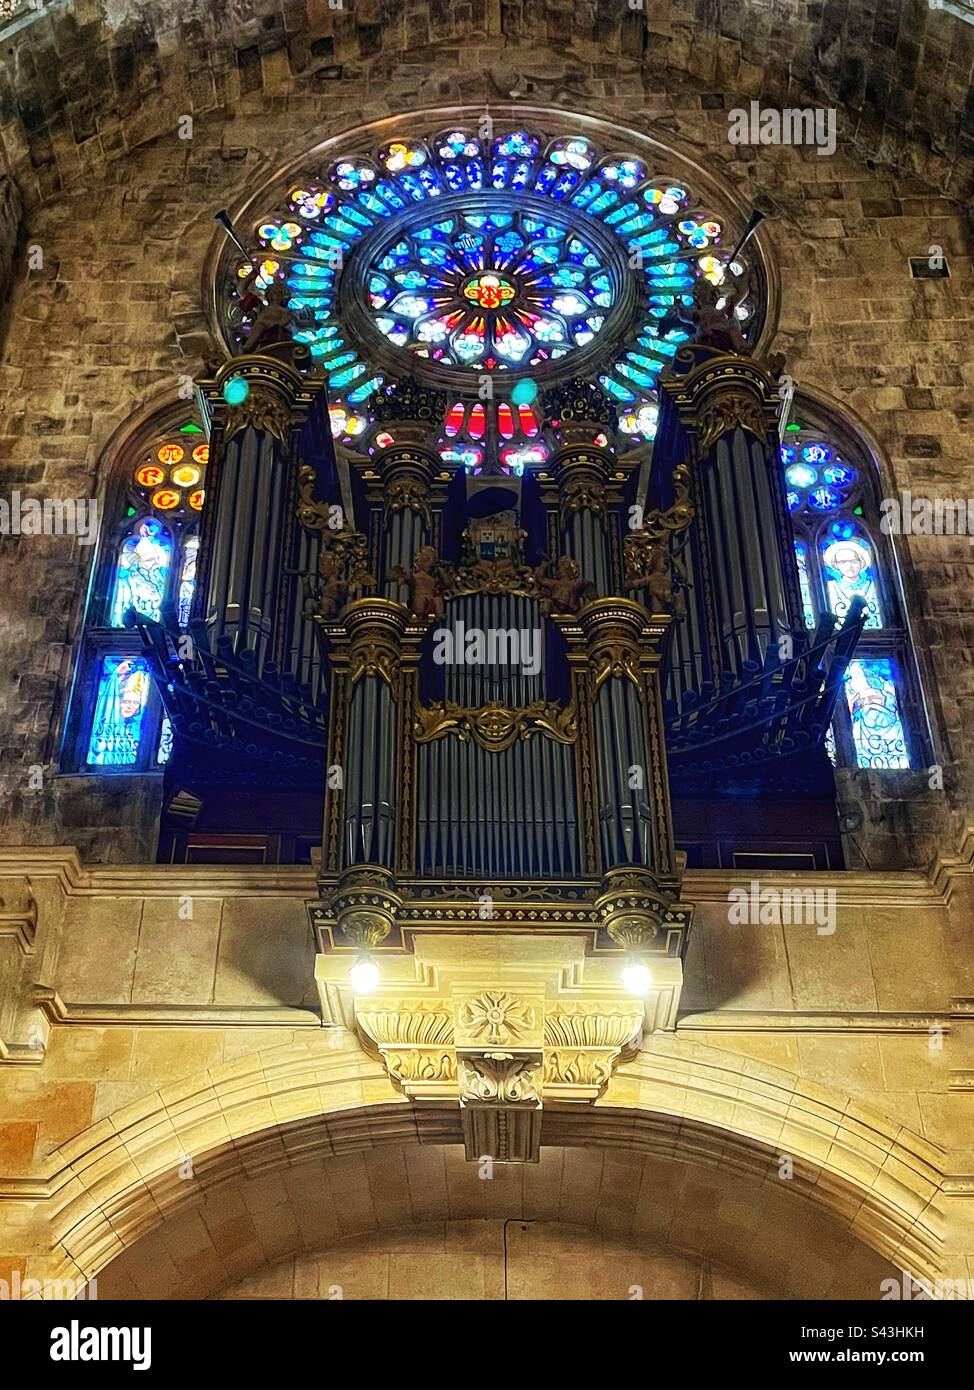 Església de Sant Bartomeu, Soller, Mallorca interior with organ and rose window. Originally 13th century this Roman Catholic Church now with Gothic, Baroque and Art Nouveau styles. Stock Photo